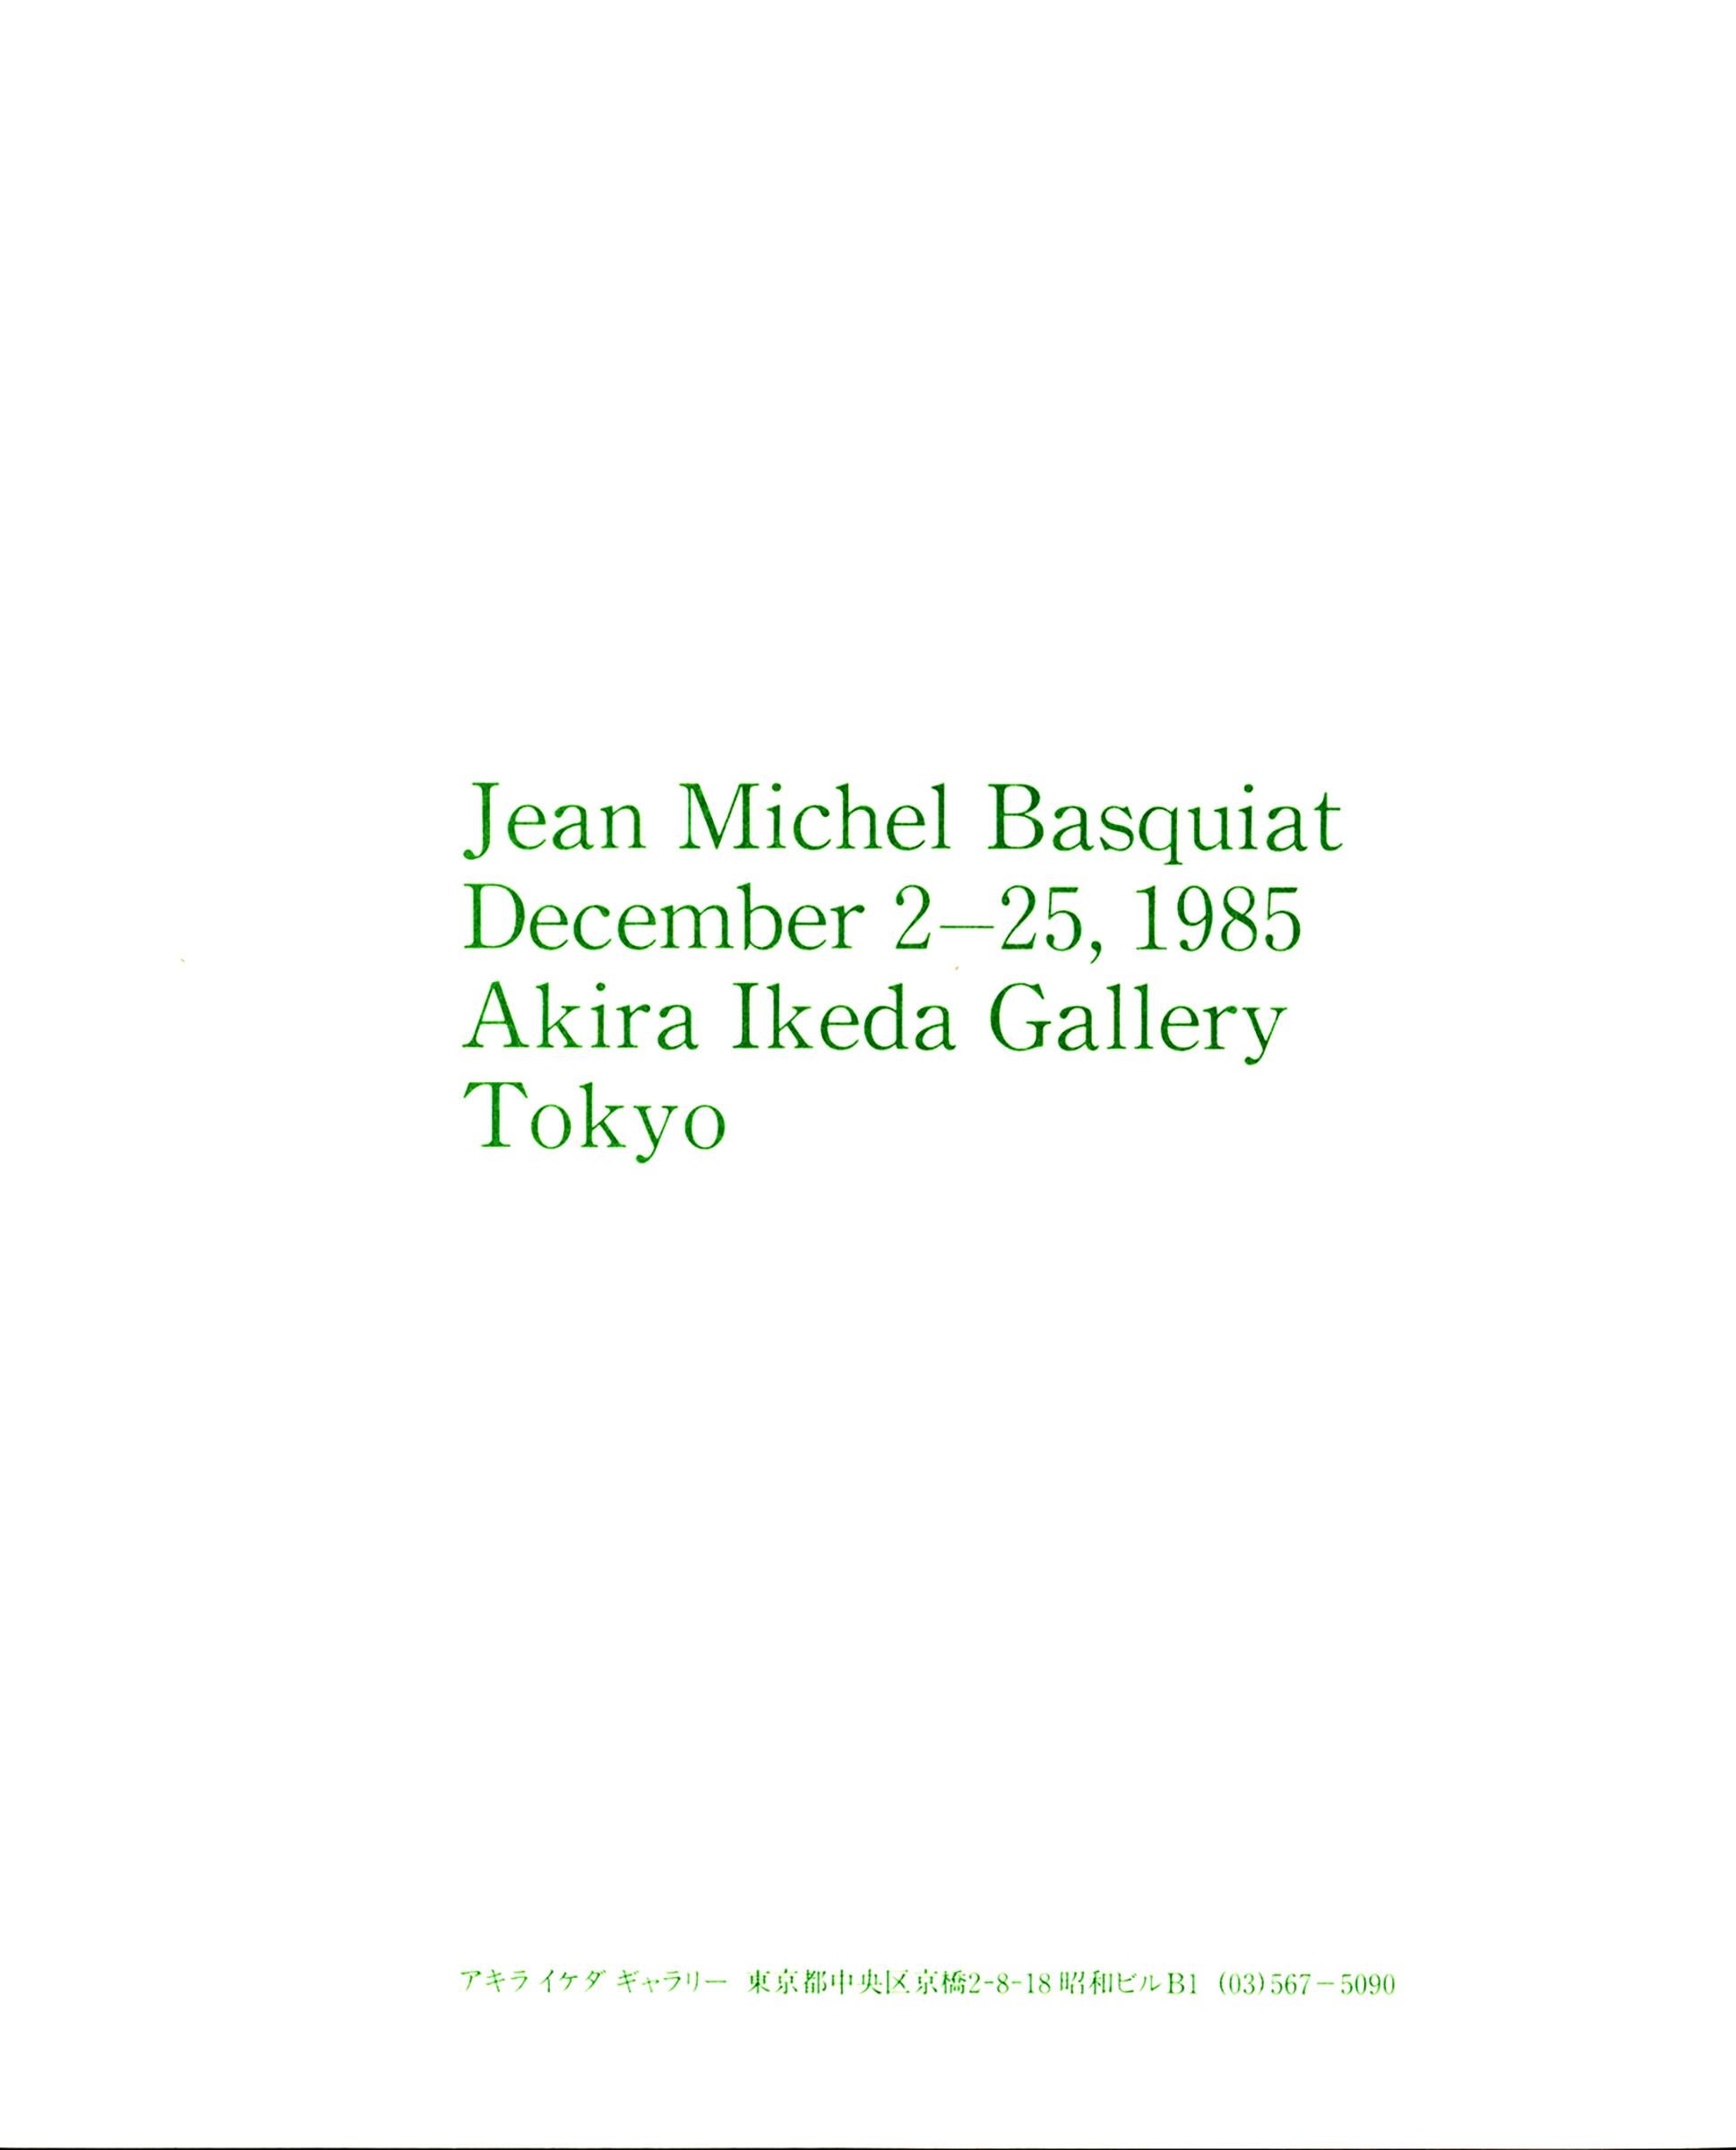 Jean Michel Basquiat: Paintings, 1985 Exhibition Catalog Akira Ikeda Gallery - Pop Art Art by Jean-Michel Basquiat